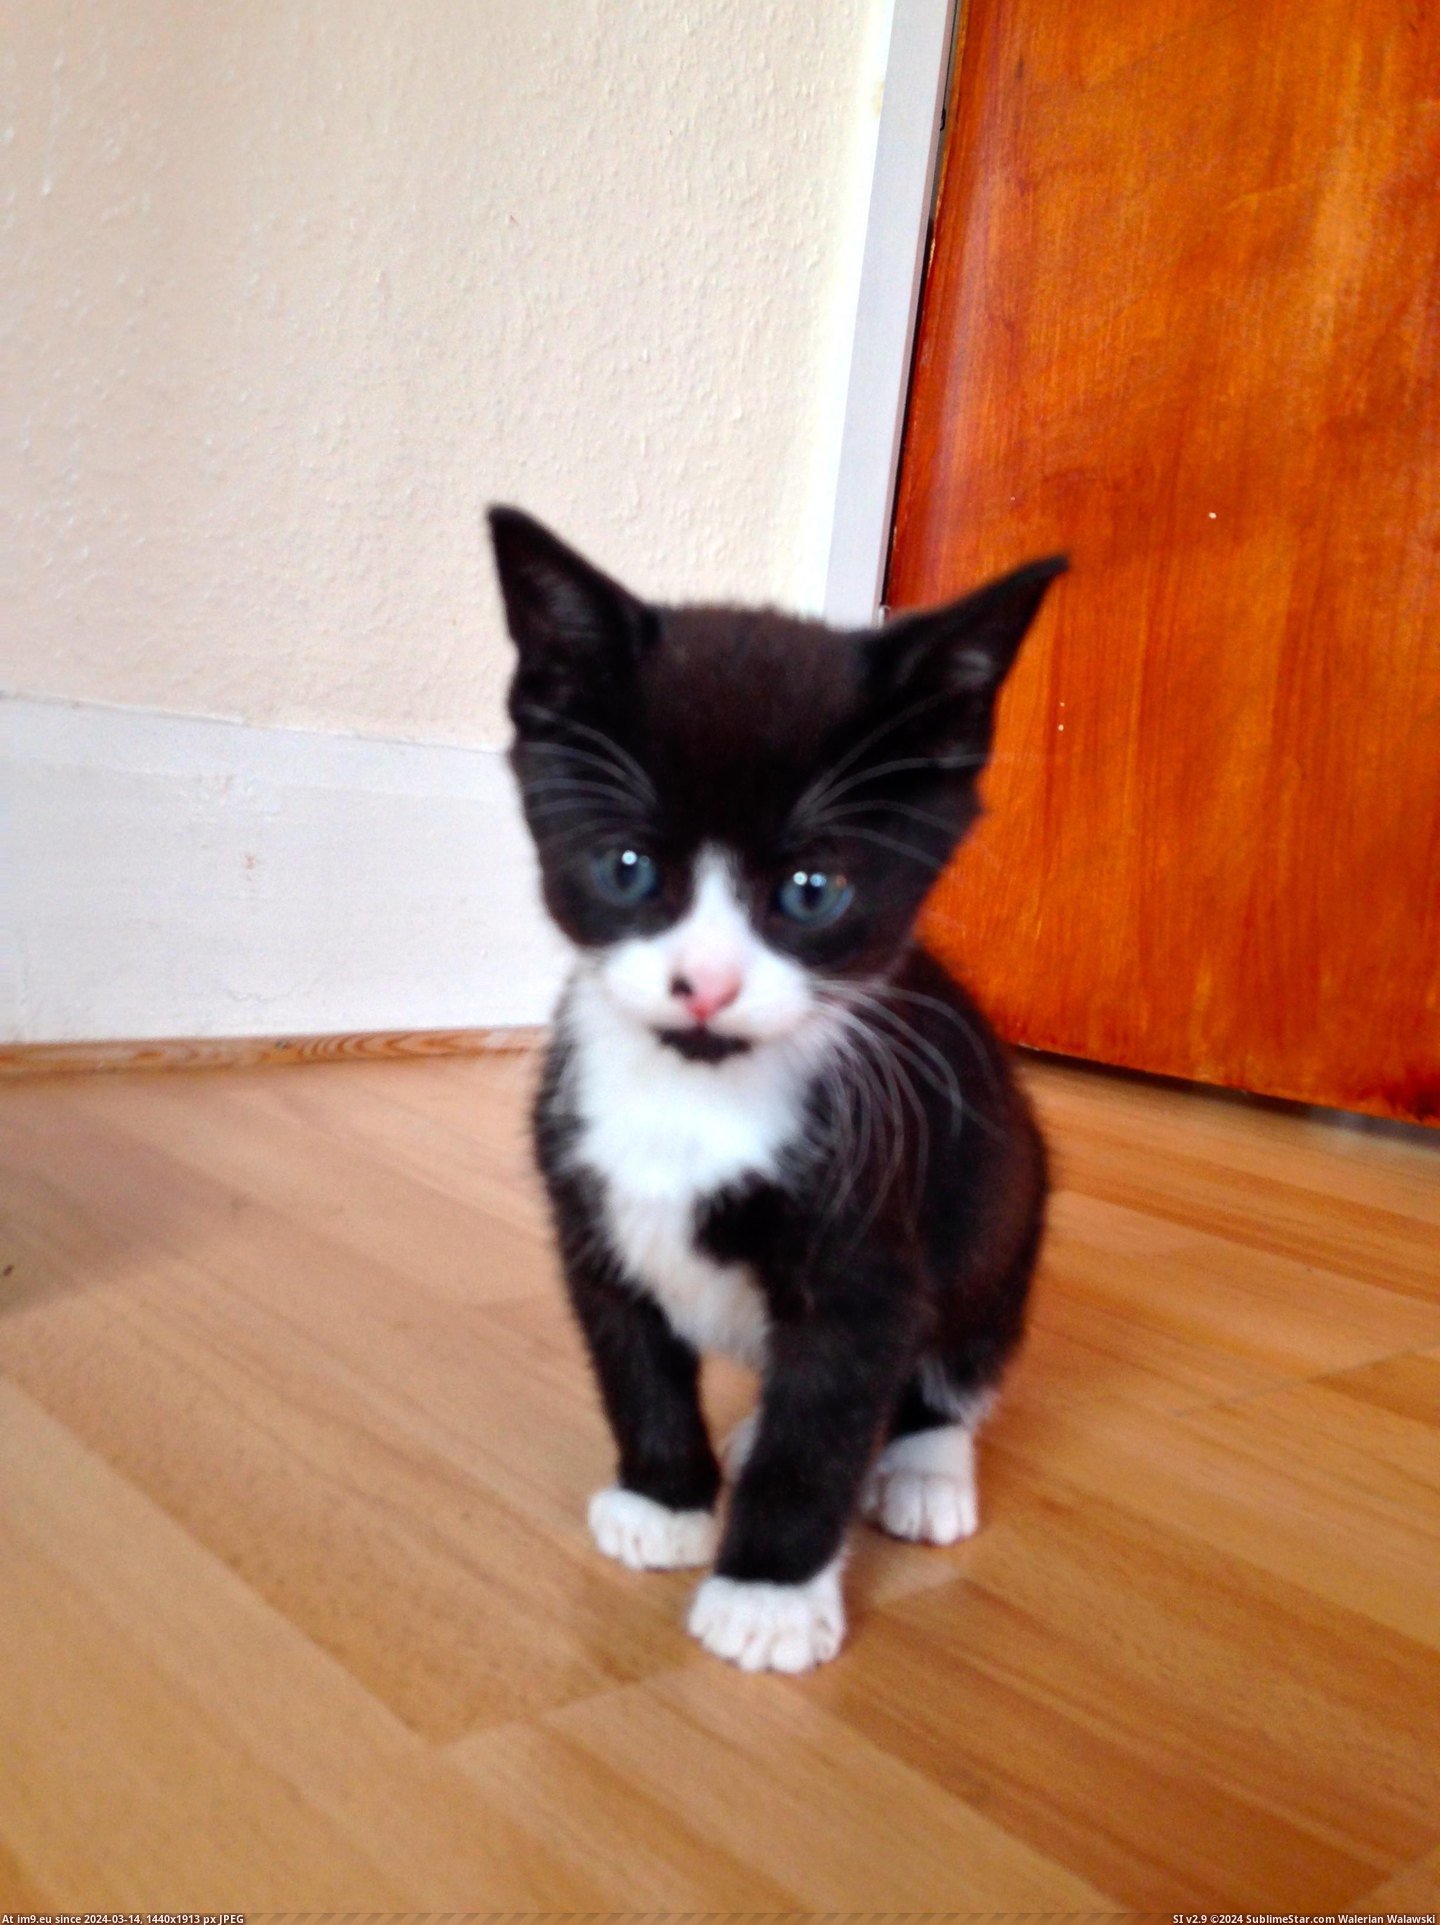 #Cats #Kitten #Miyagi #Vincenzo #Forgotten #Offspring [Cats] Vincenzo the kitten: Mr Miyagi's forgotten offspring Pic. (Изображение из альбом My r/CATS favs))